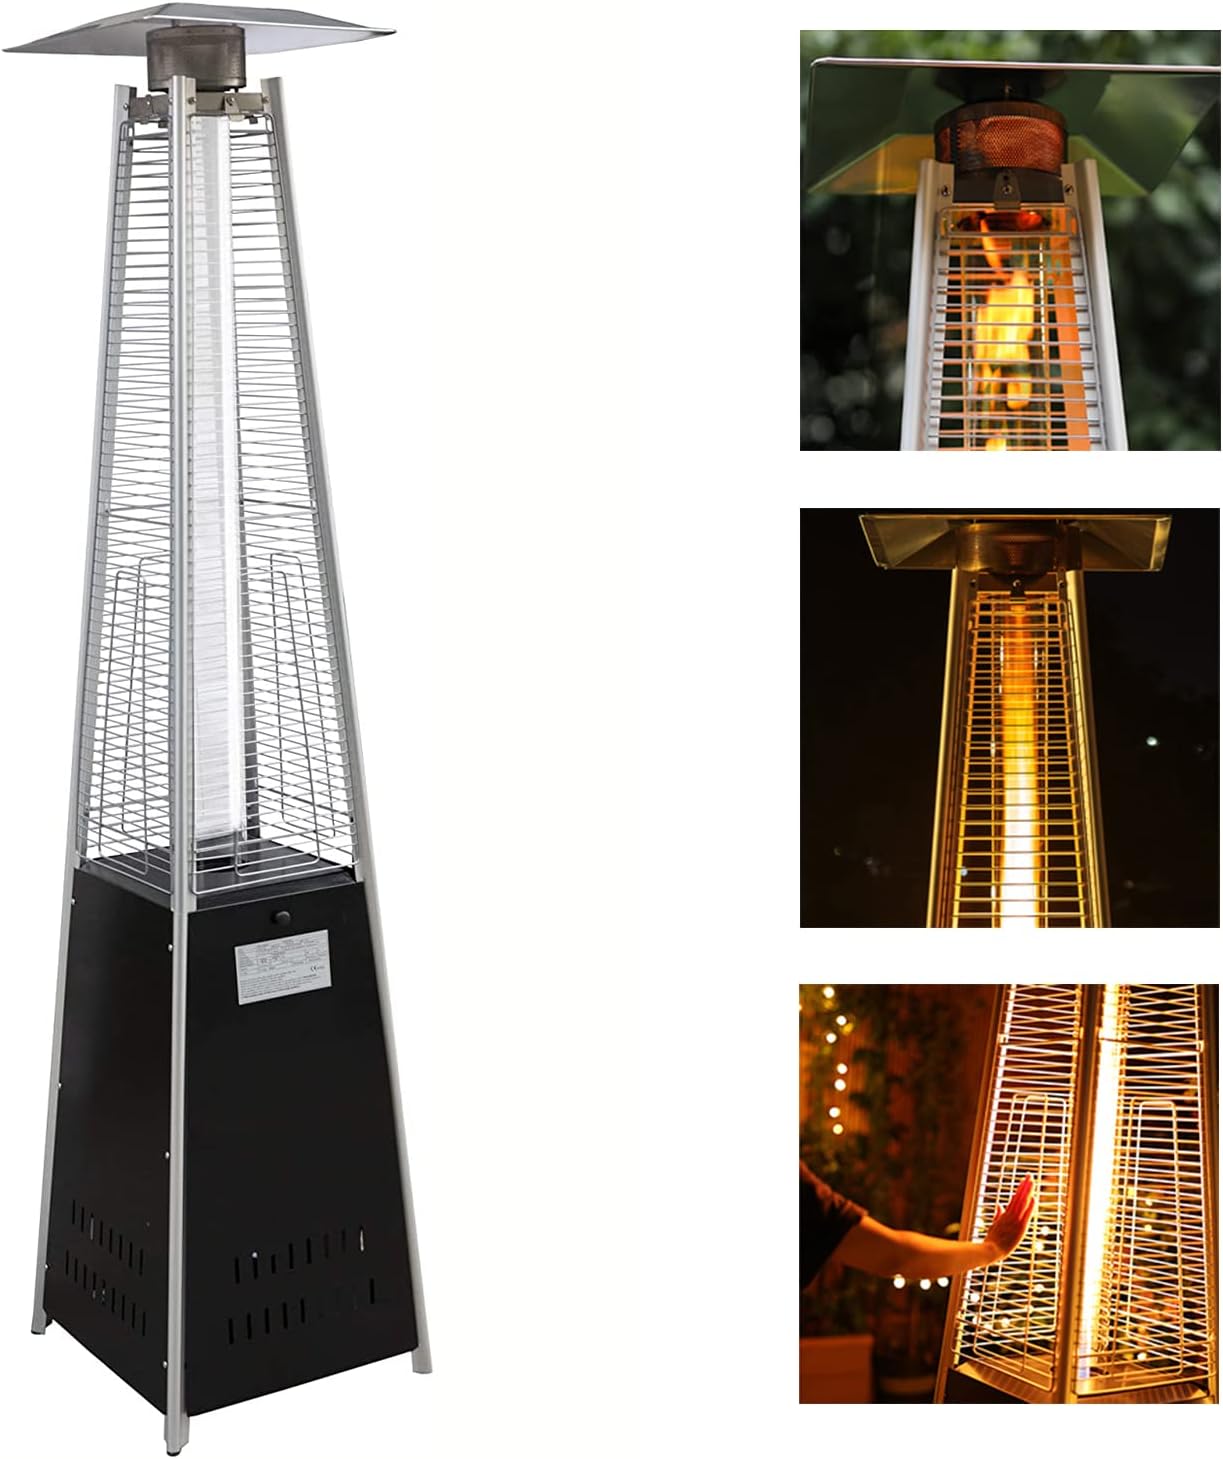 Pyramid Patio Heater Propane Outdoor 42,000 BTU Quartz Glass Tube Flame Heater with Wheels, Black